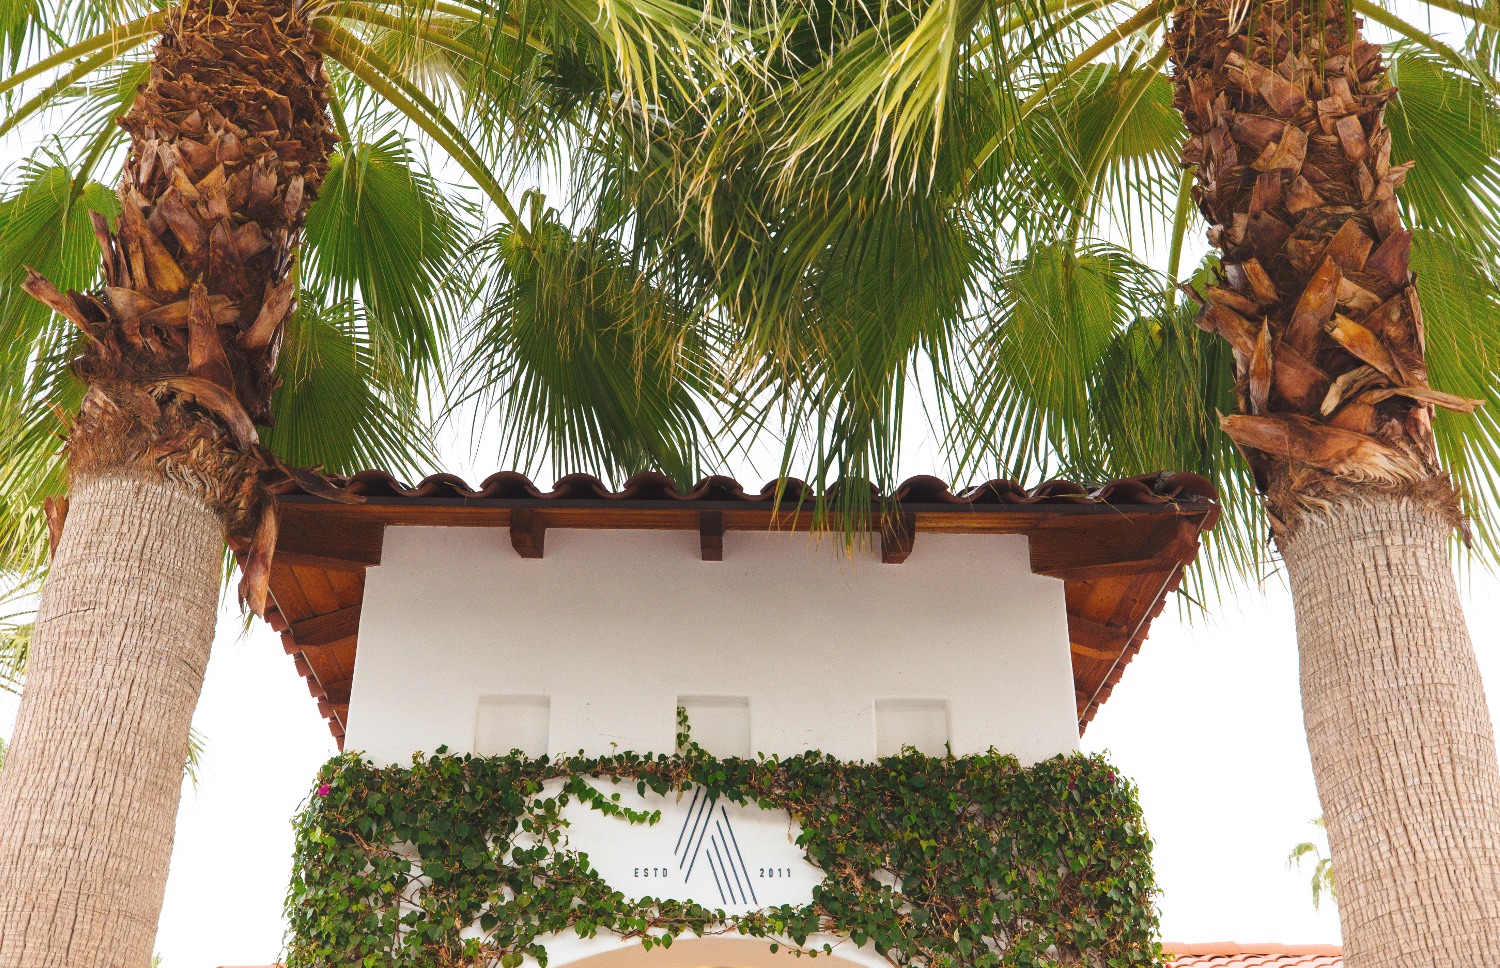 Alcazar Hotel arch with ivy